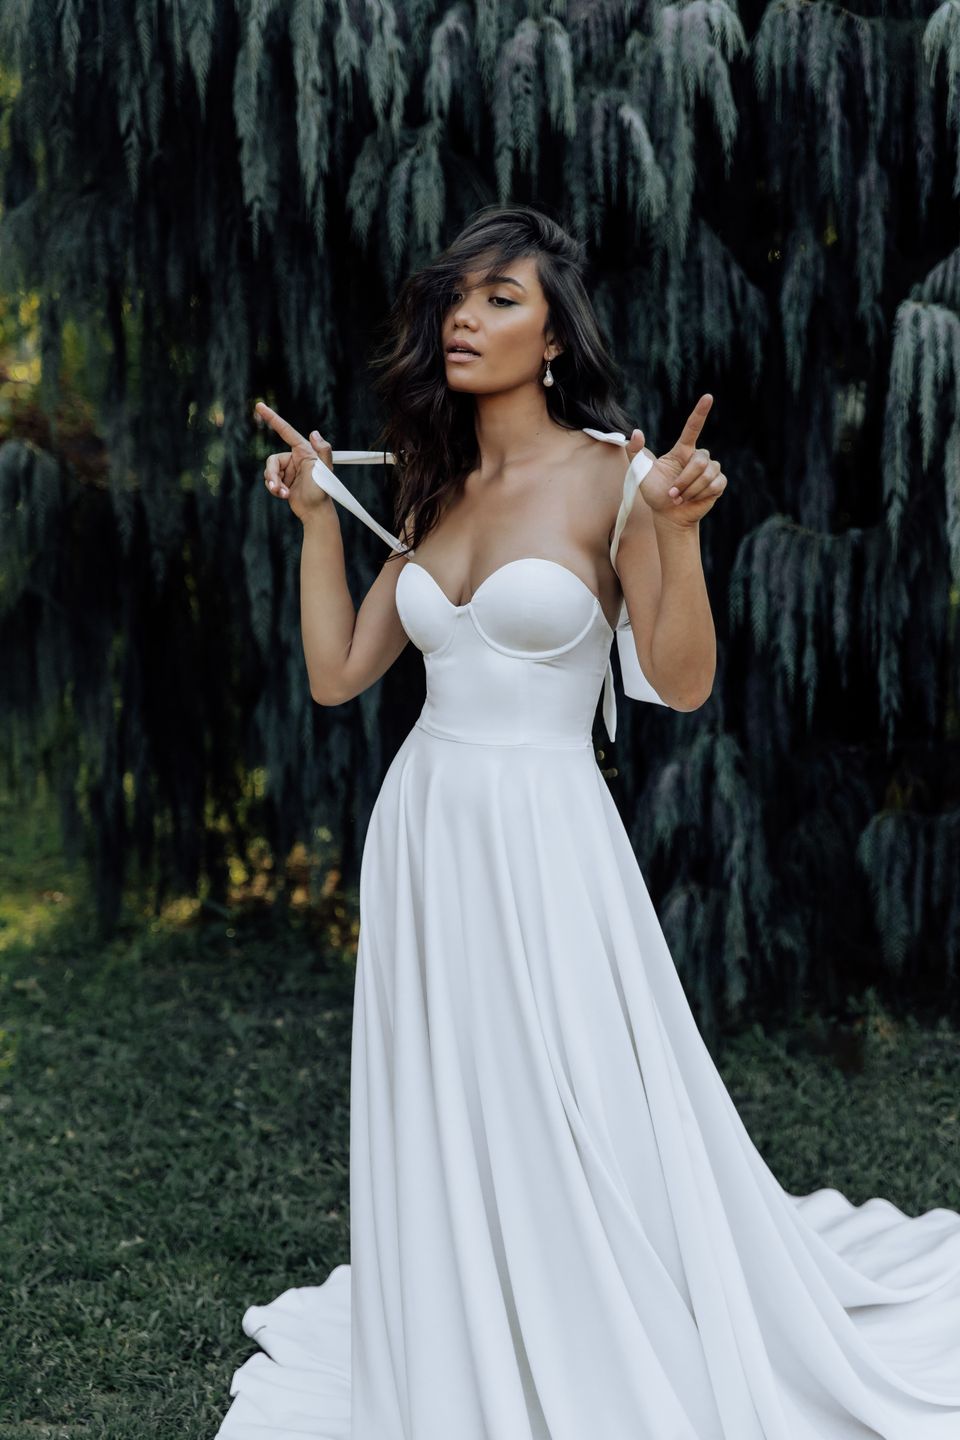 49 Stylish And Pretty Backyard Wedding Dresses - Weddingomania